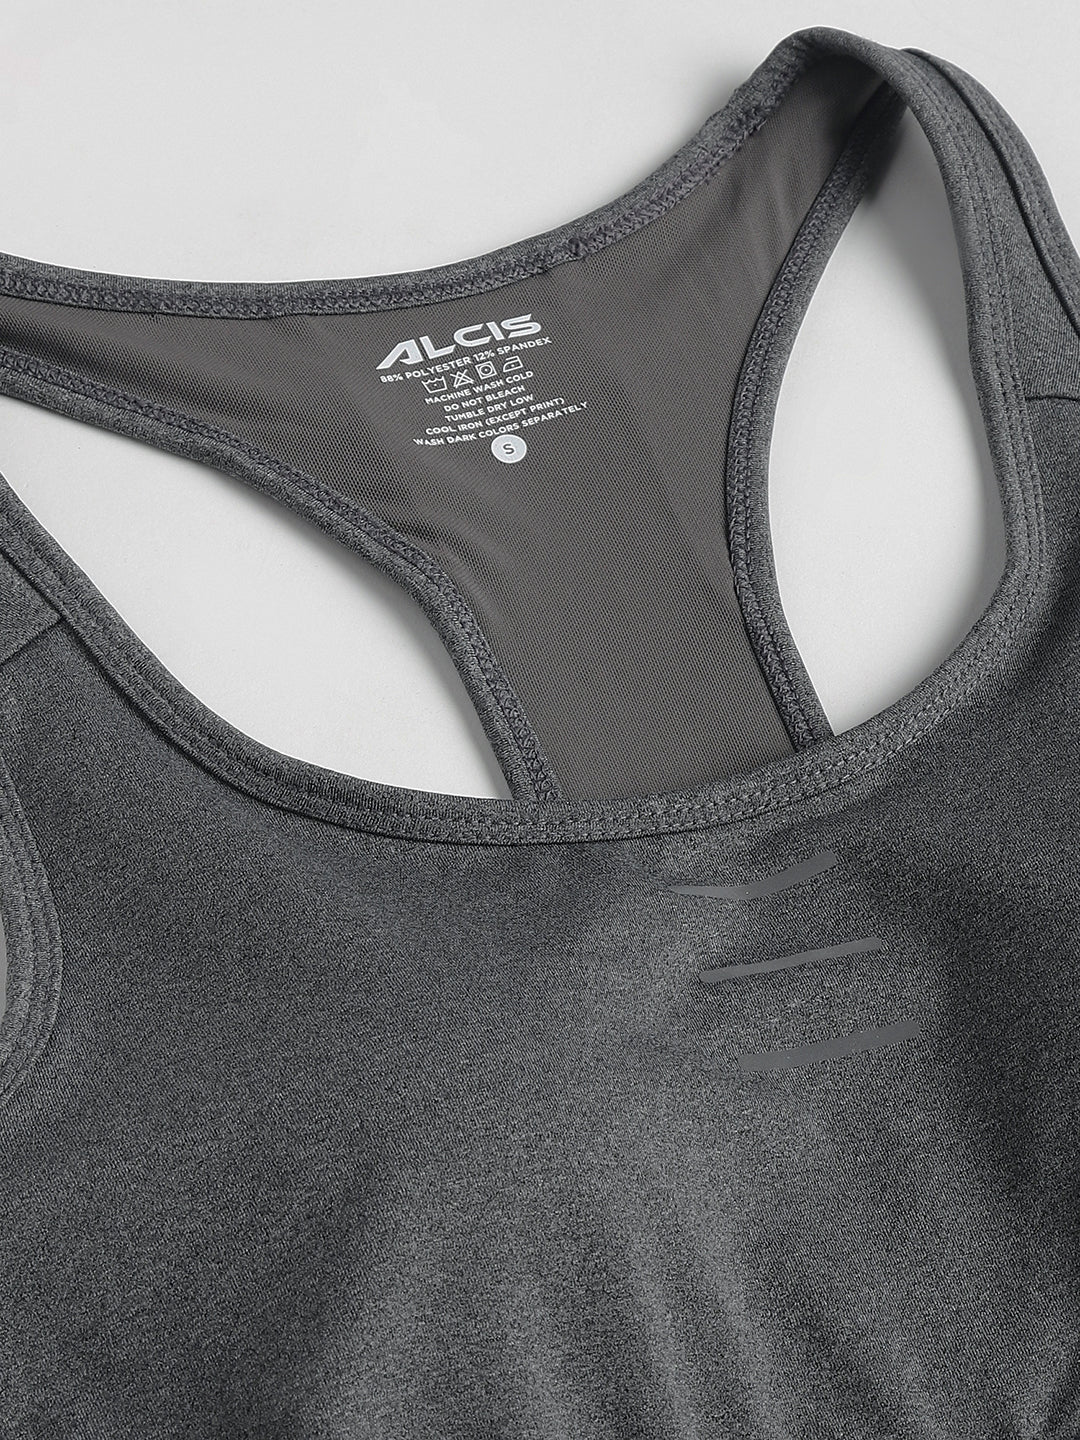 Alcis Women Dark Grey Anti-Static Slim-Fit Sports Training Bra Top